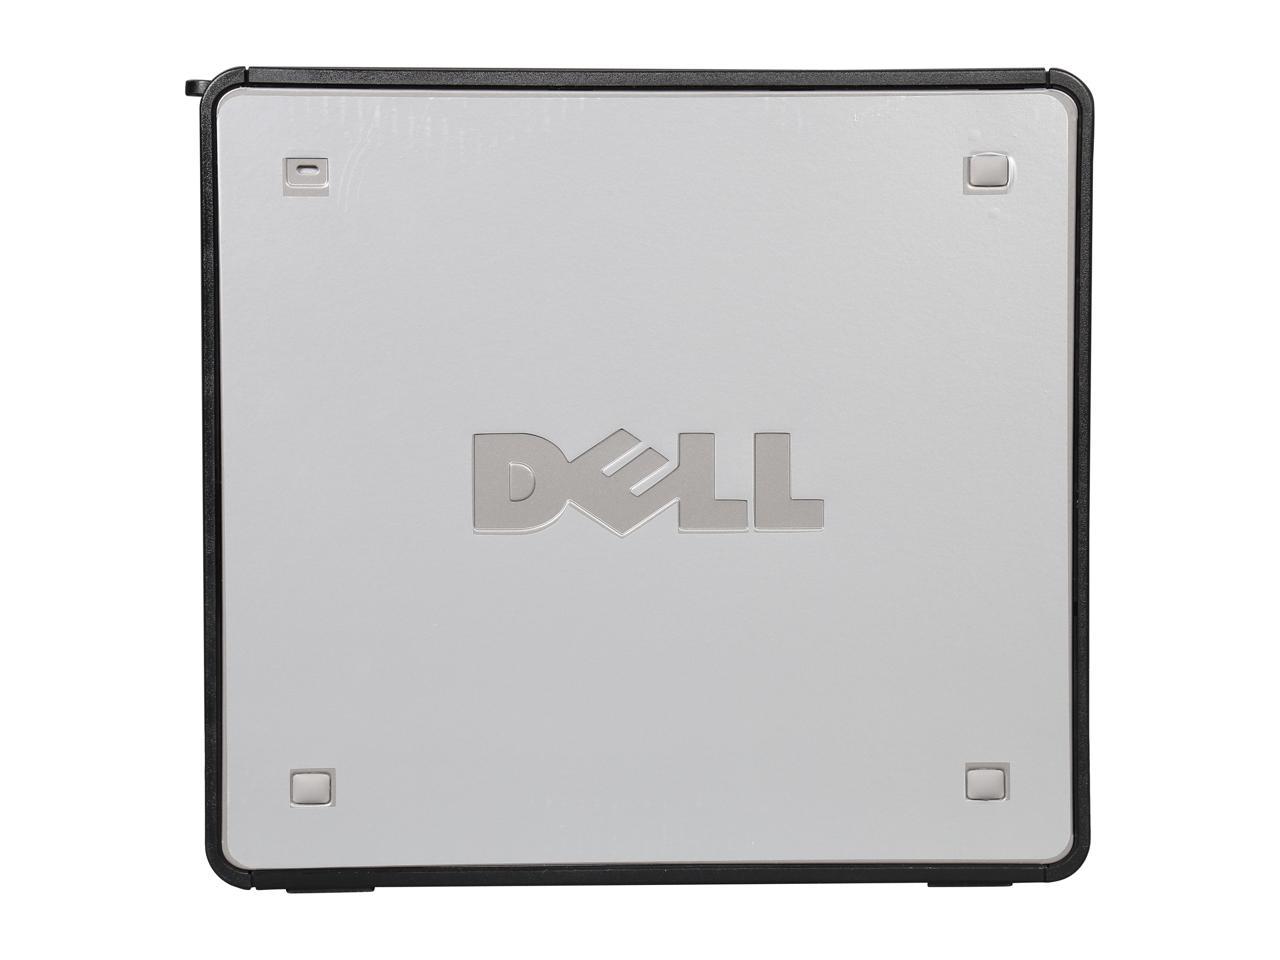 DELL [Microsoft Authorized Refurbished] Desktop Computer OptiPlex 760 Core 2 Duo 3.0GHz 2GB DDR2 80GB HDD Windows 7 Home Premium 32-Bit